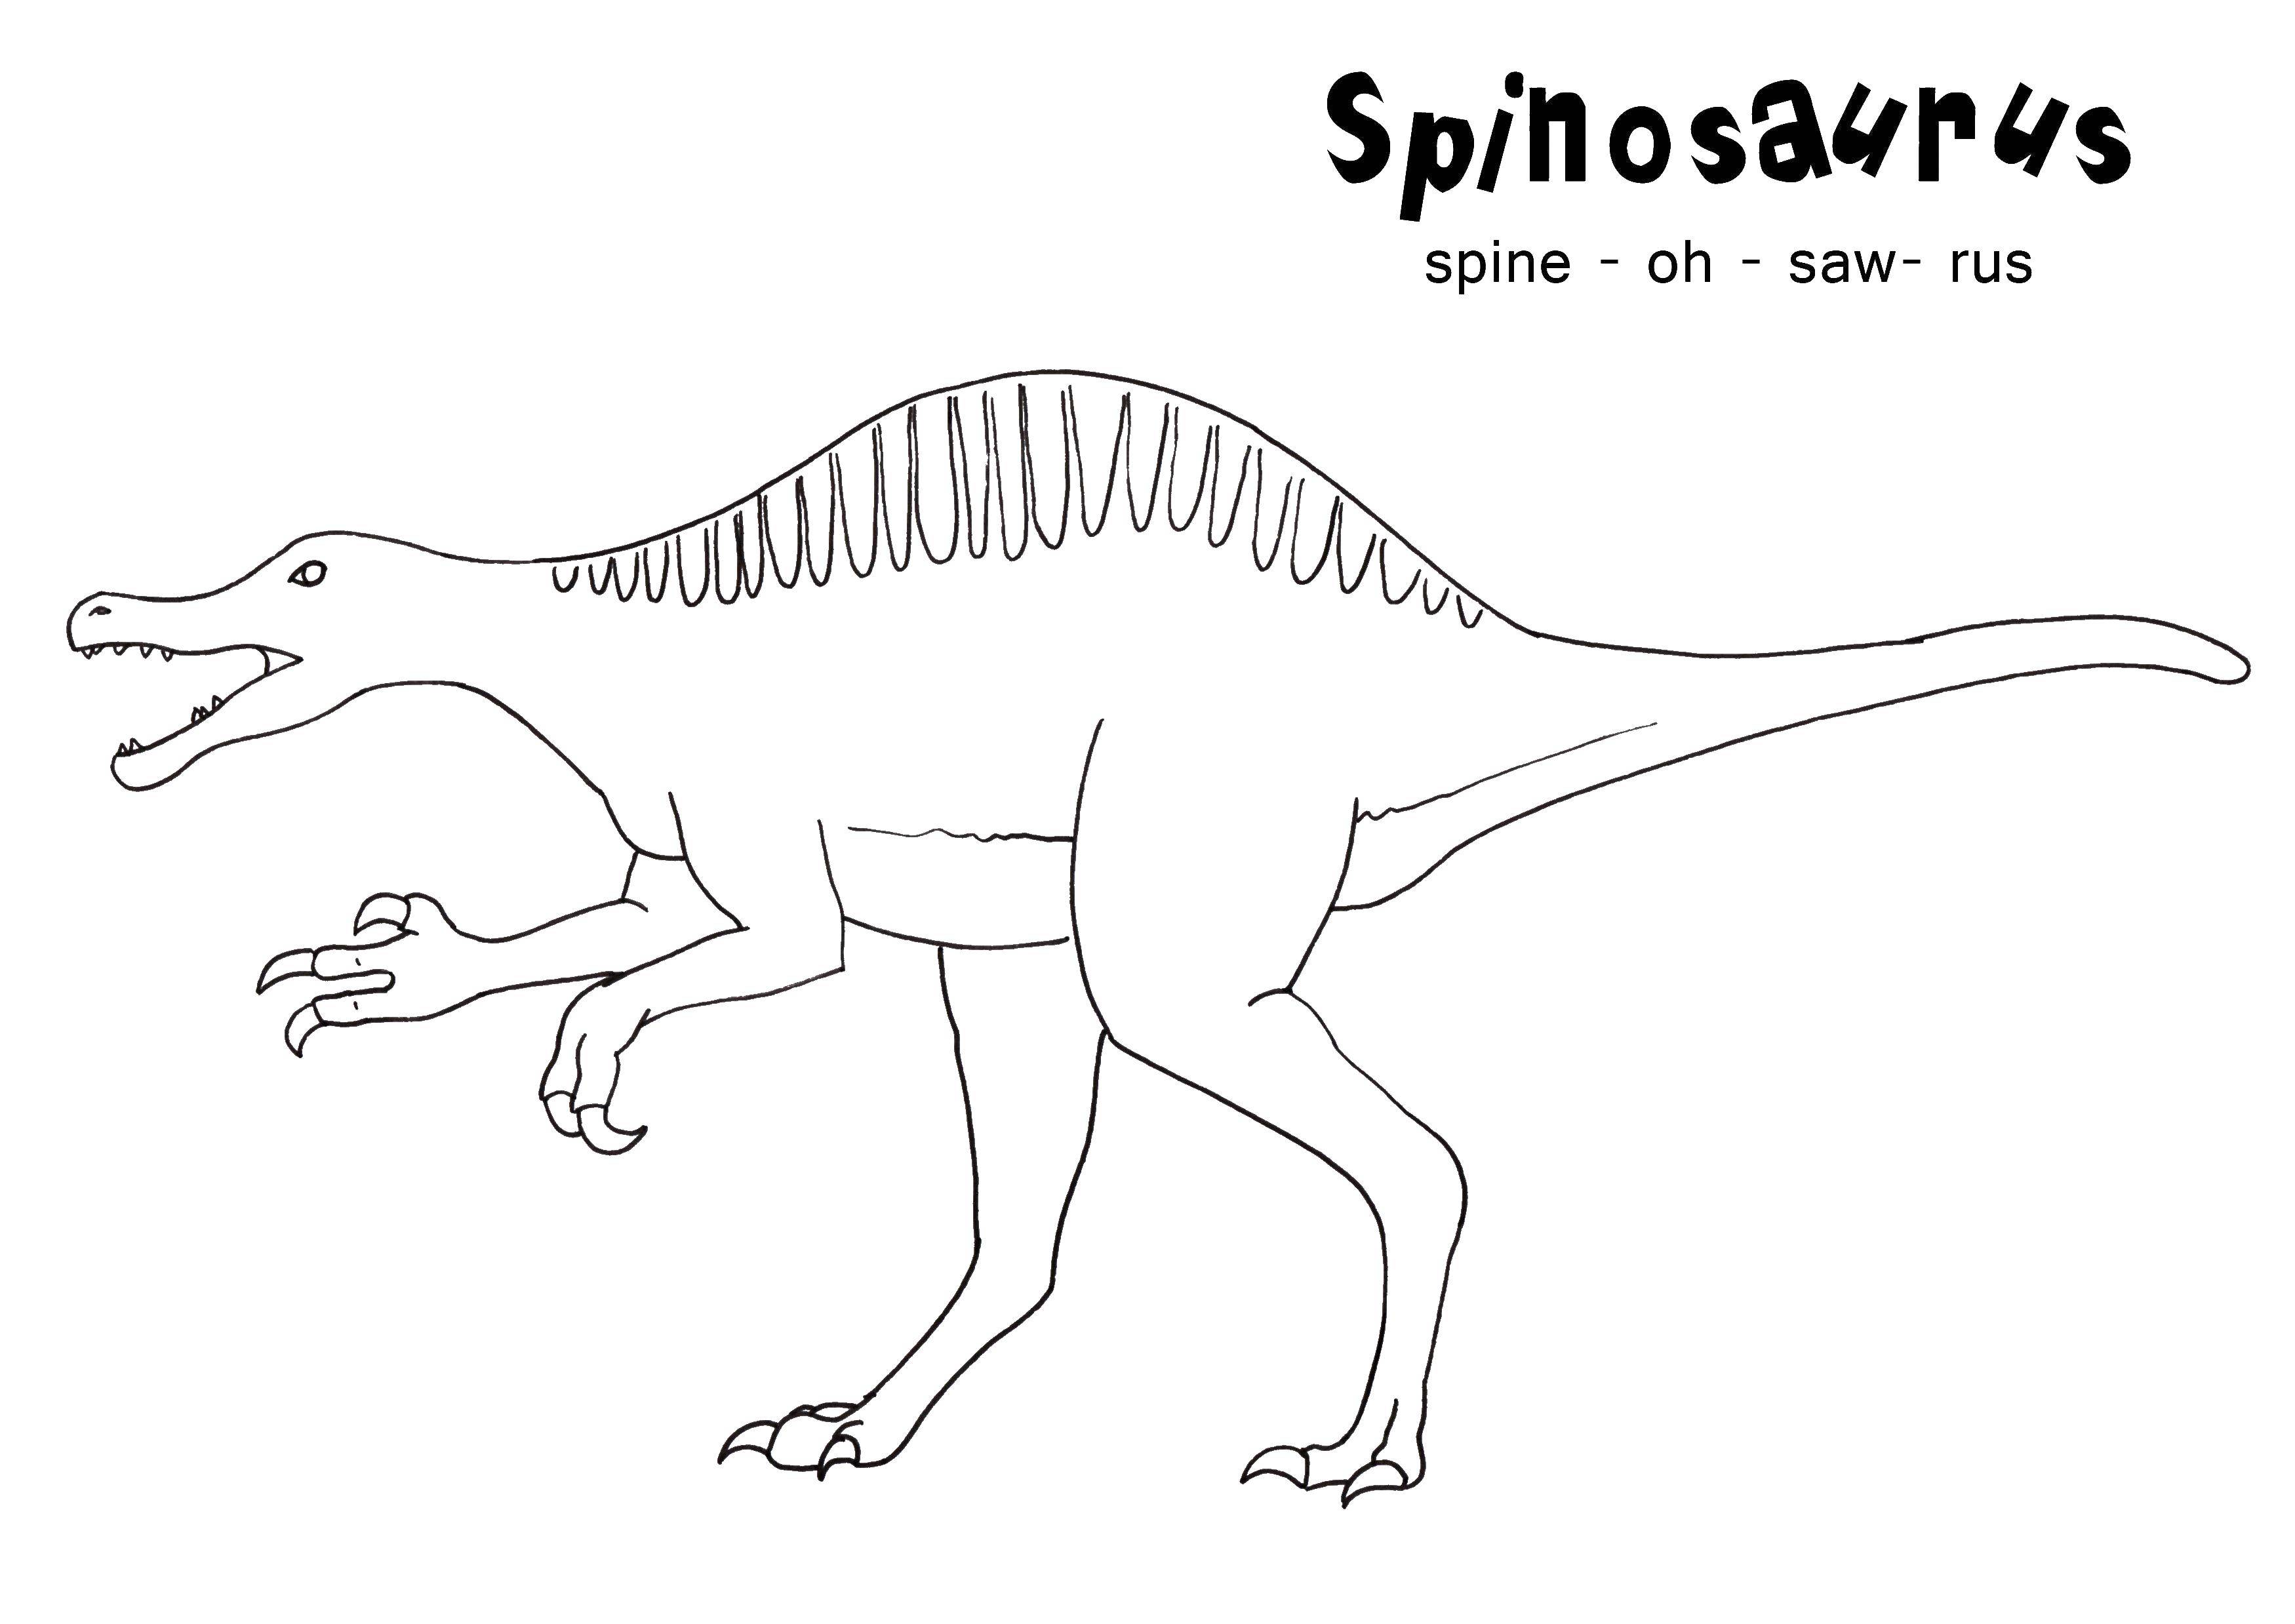 Coloring Spinosaurus. Category dinosaur. Tags:  Dinosaurs.